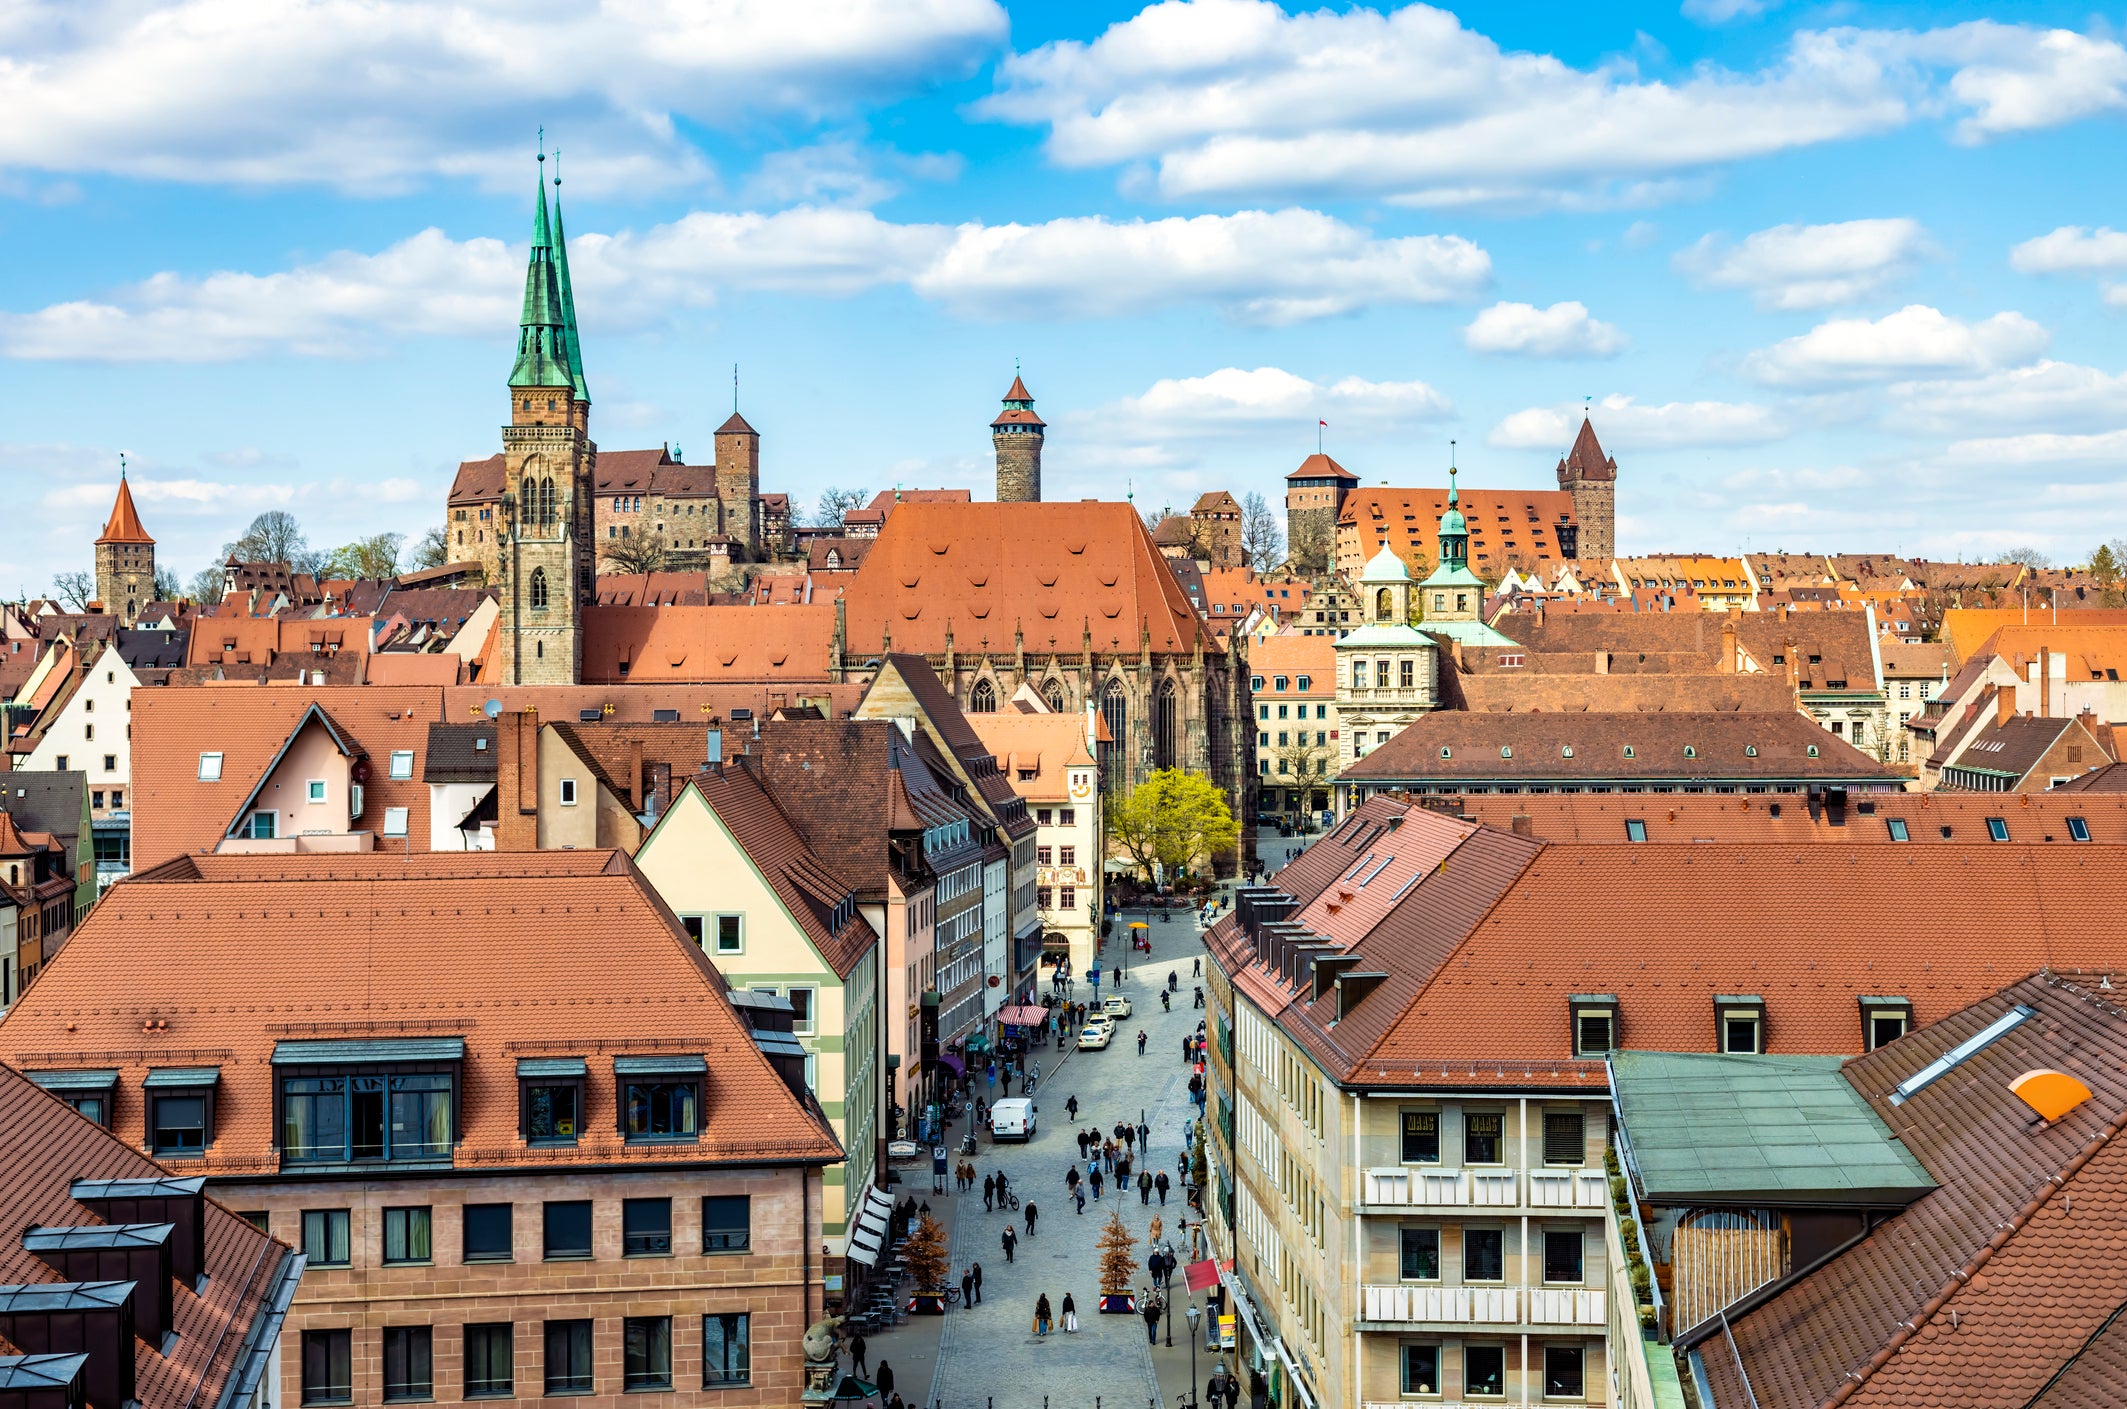 The old town in Nuremberg displays a distinctive Bavarian charm